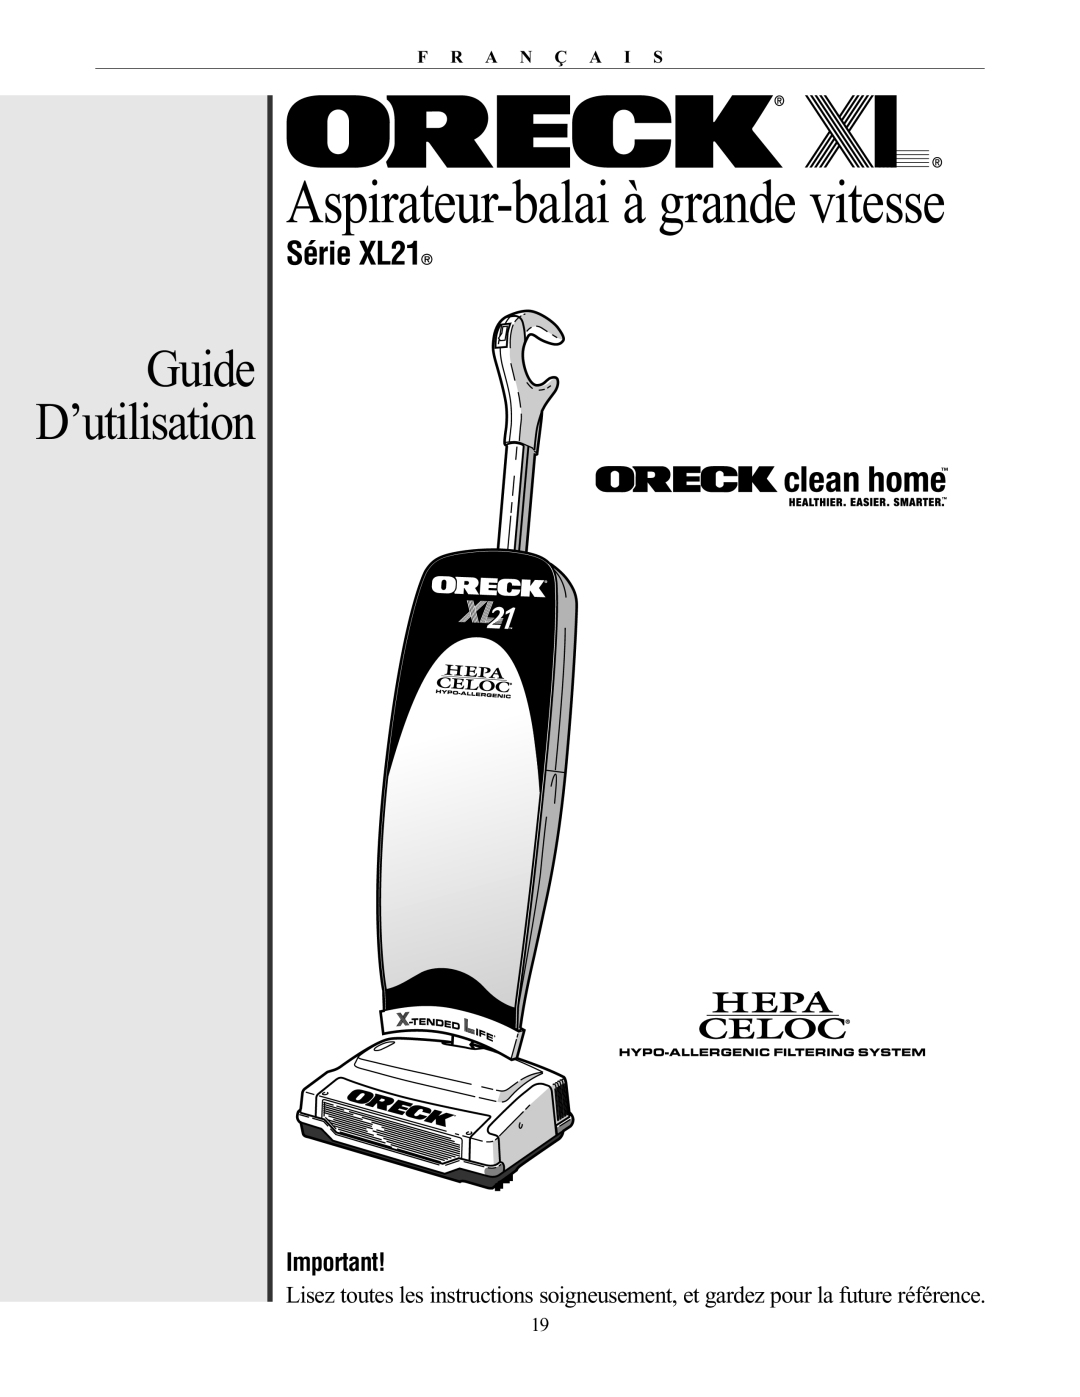 Oreck manual Guide D’utilisation, Série XL21, Aspirateur-balaià grande vitesse, F R A N Ç A I S 